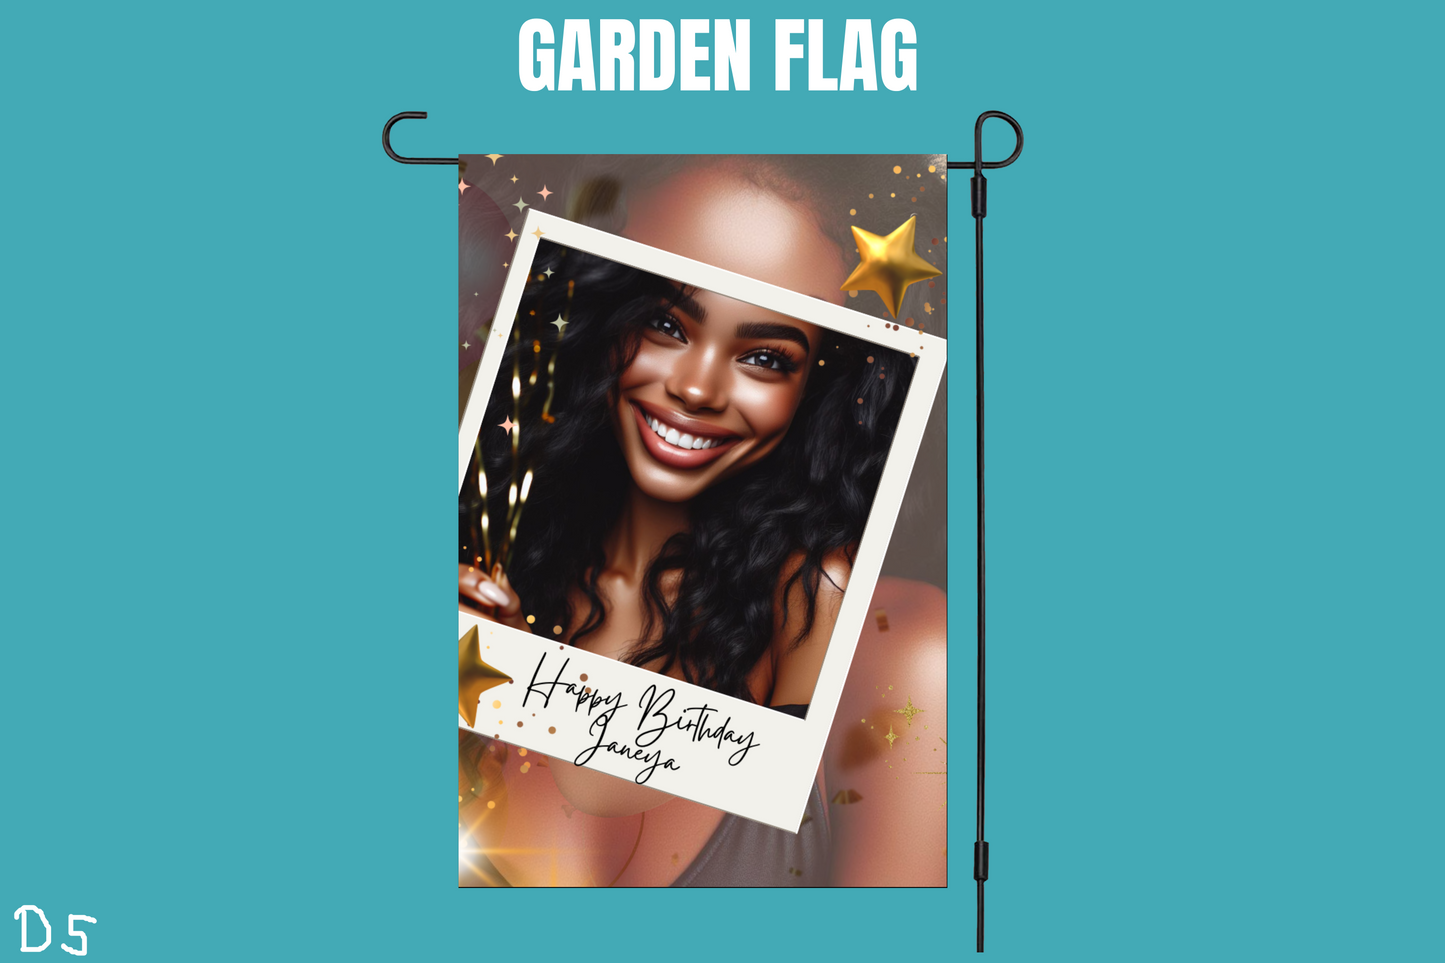 Birthday Garden Flag with poloroid